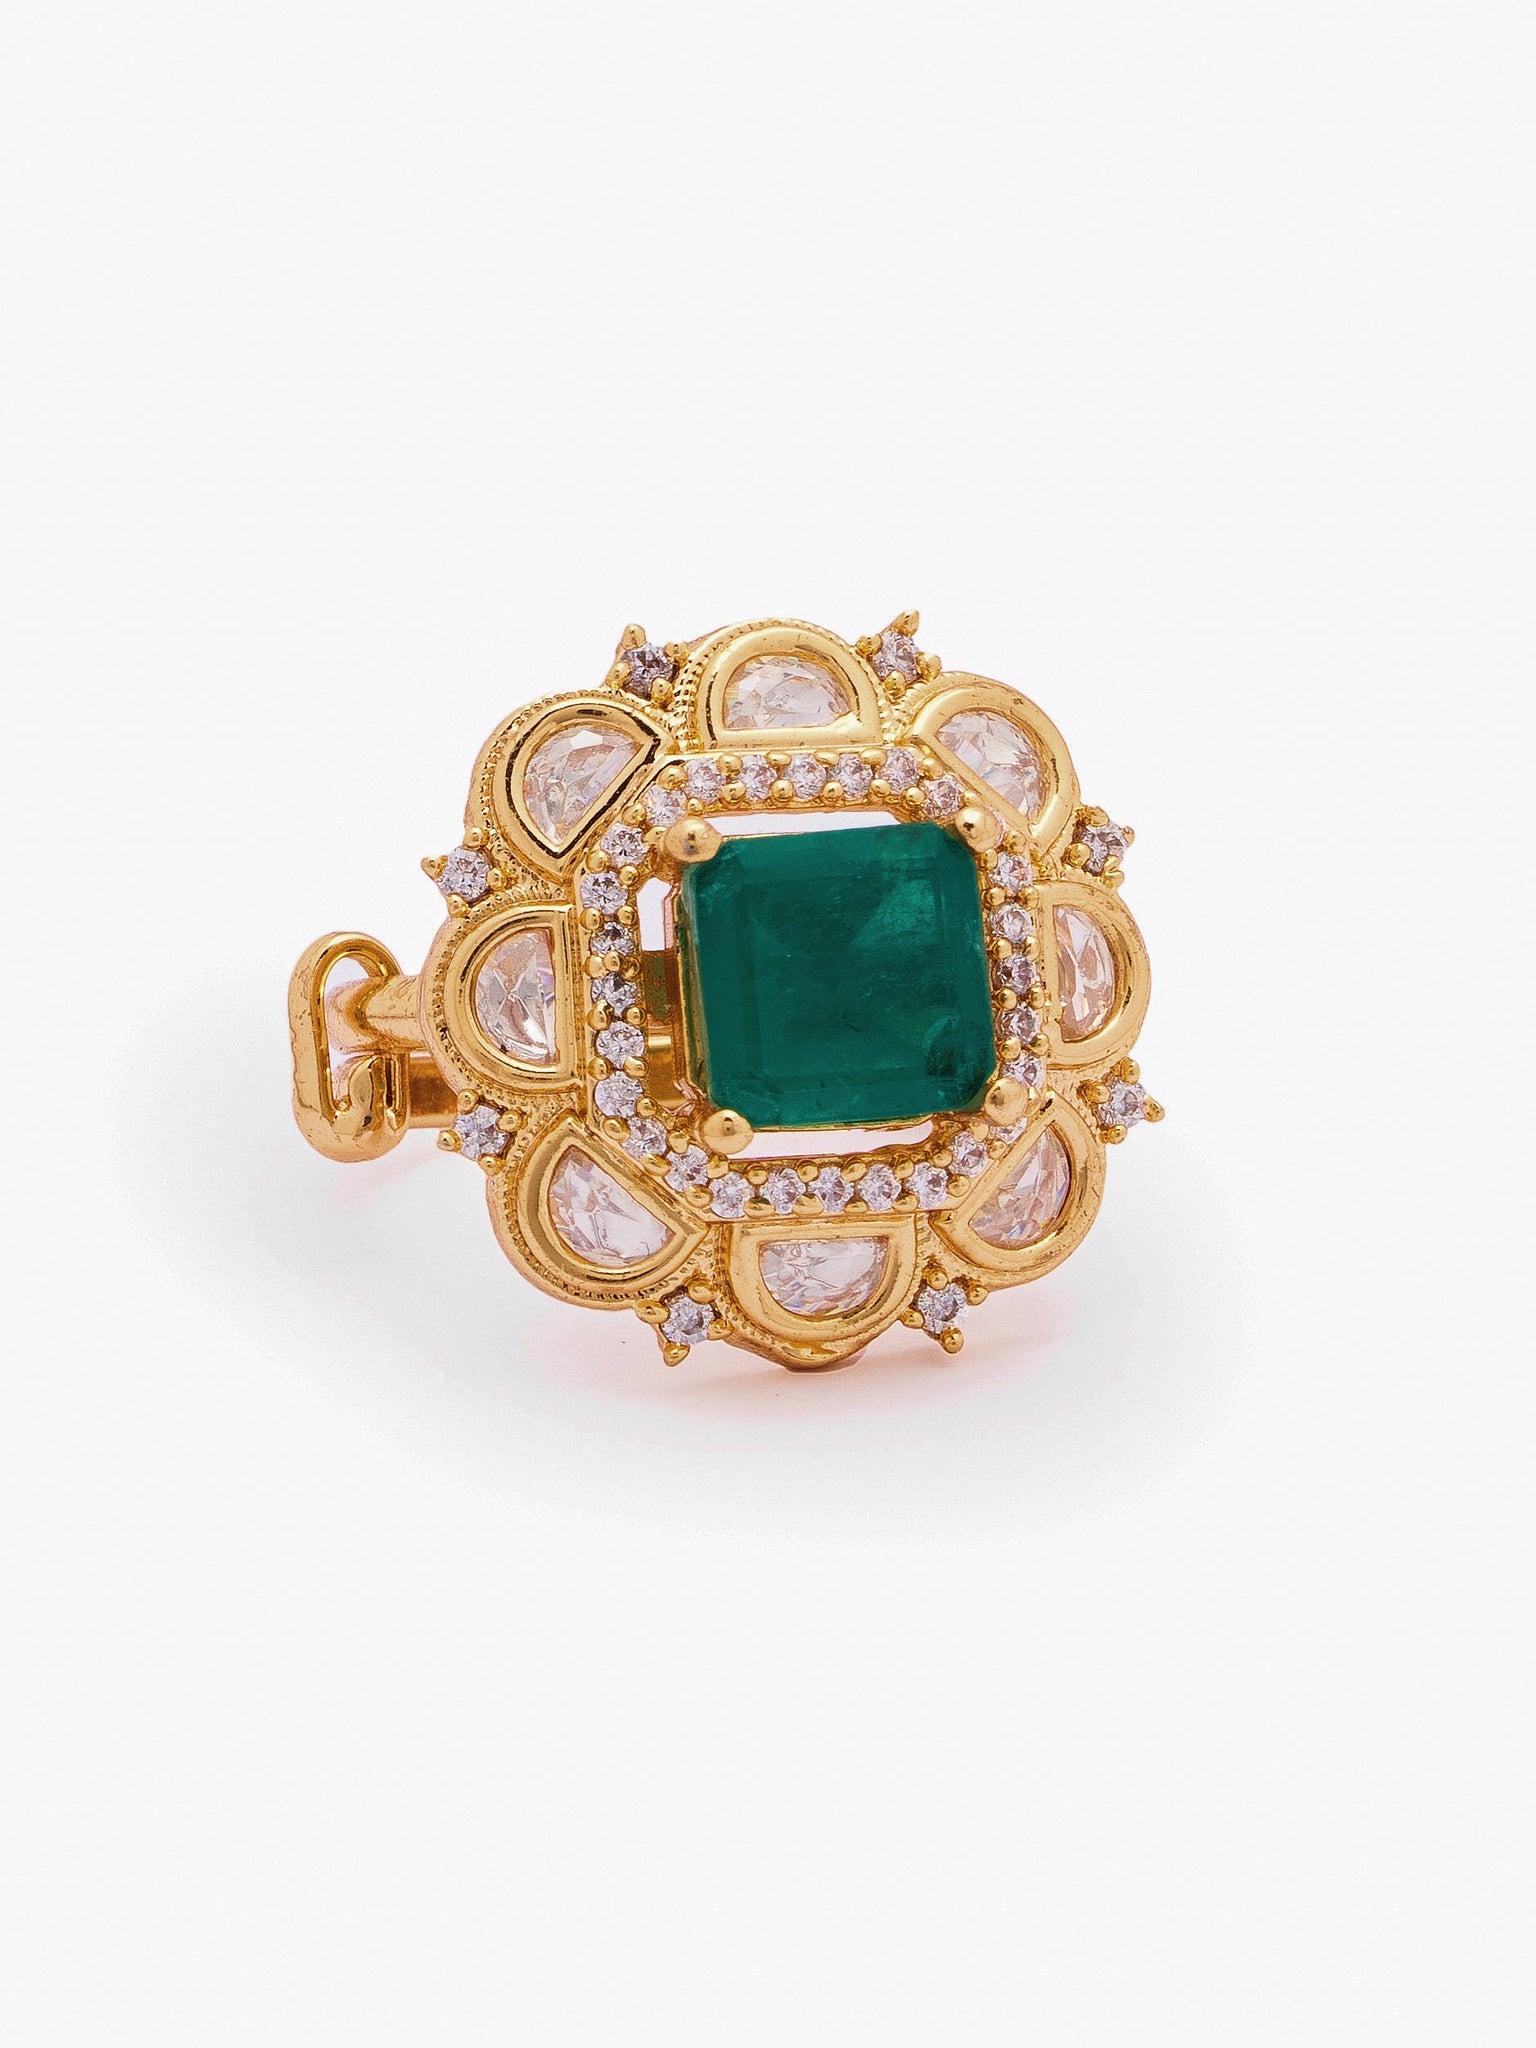  18 KT Gold-Plated Emerald Green Studded Adjustable Polki Finger Ring